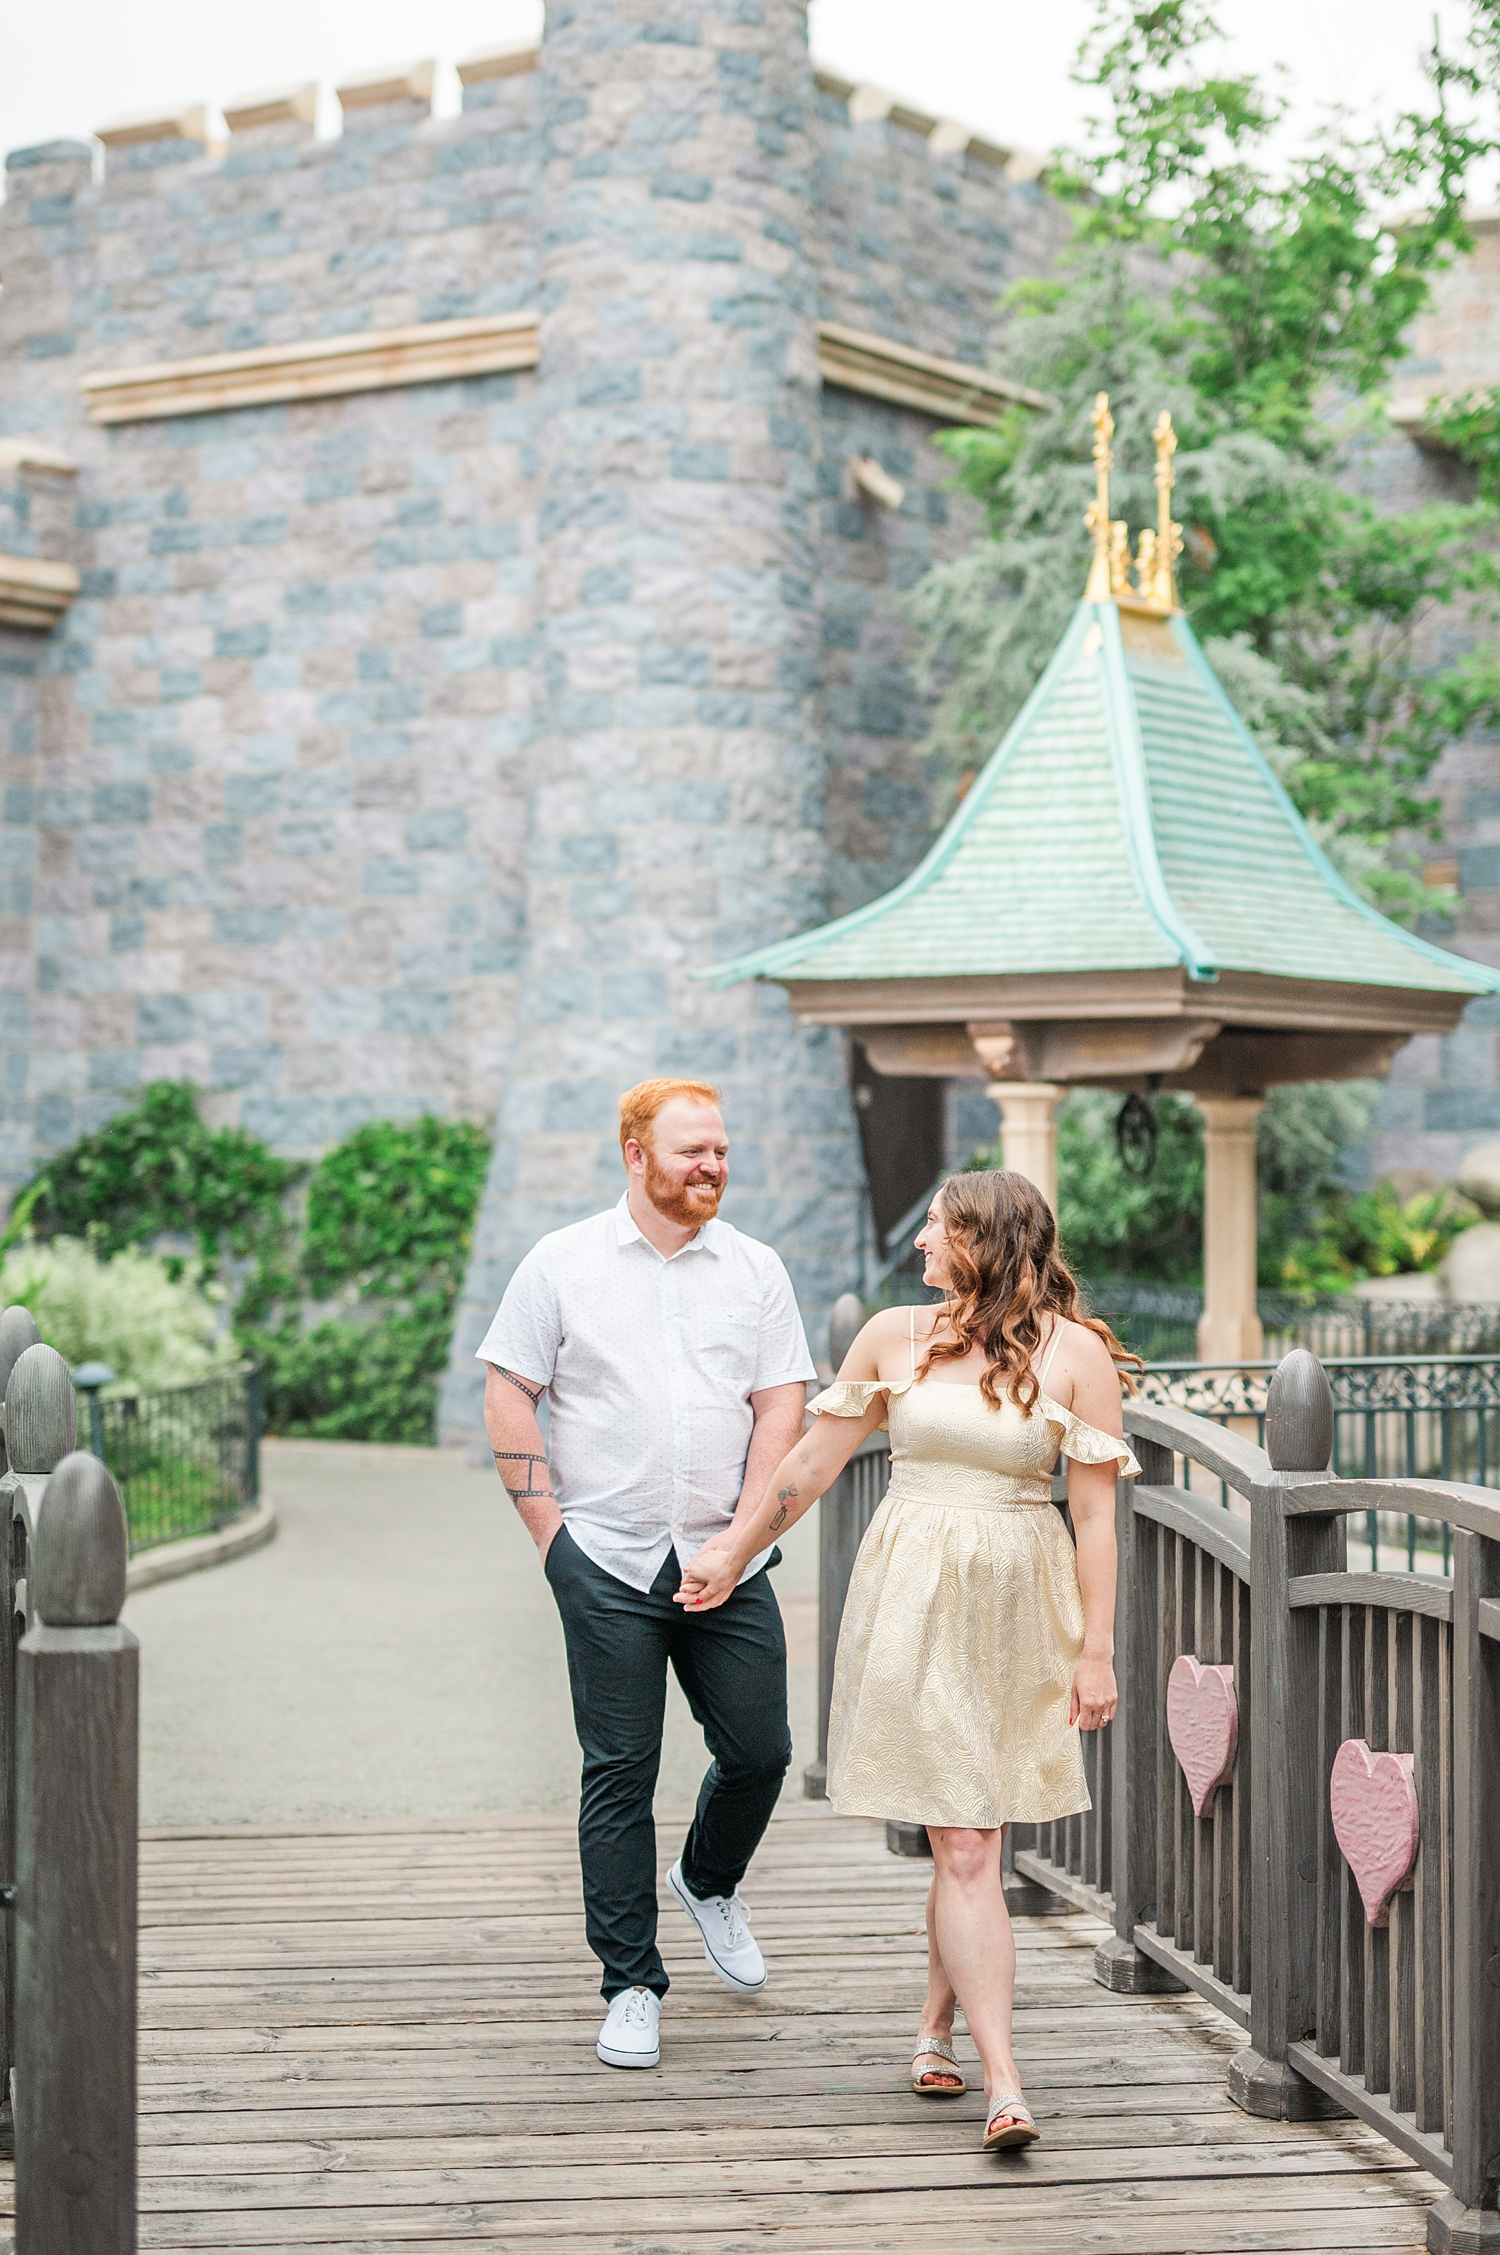 Disneyland Engagement | Disneyland Photographer | Wedding | It's a small world | teacups ride | Nataly Hernandez Photography -13.jpg